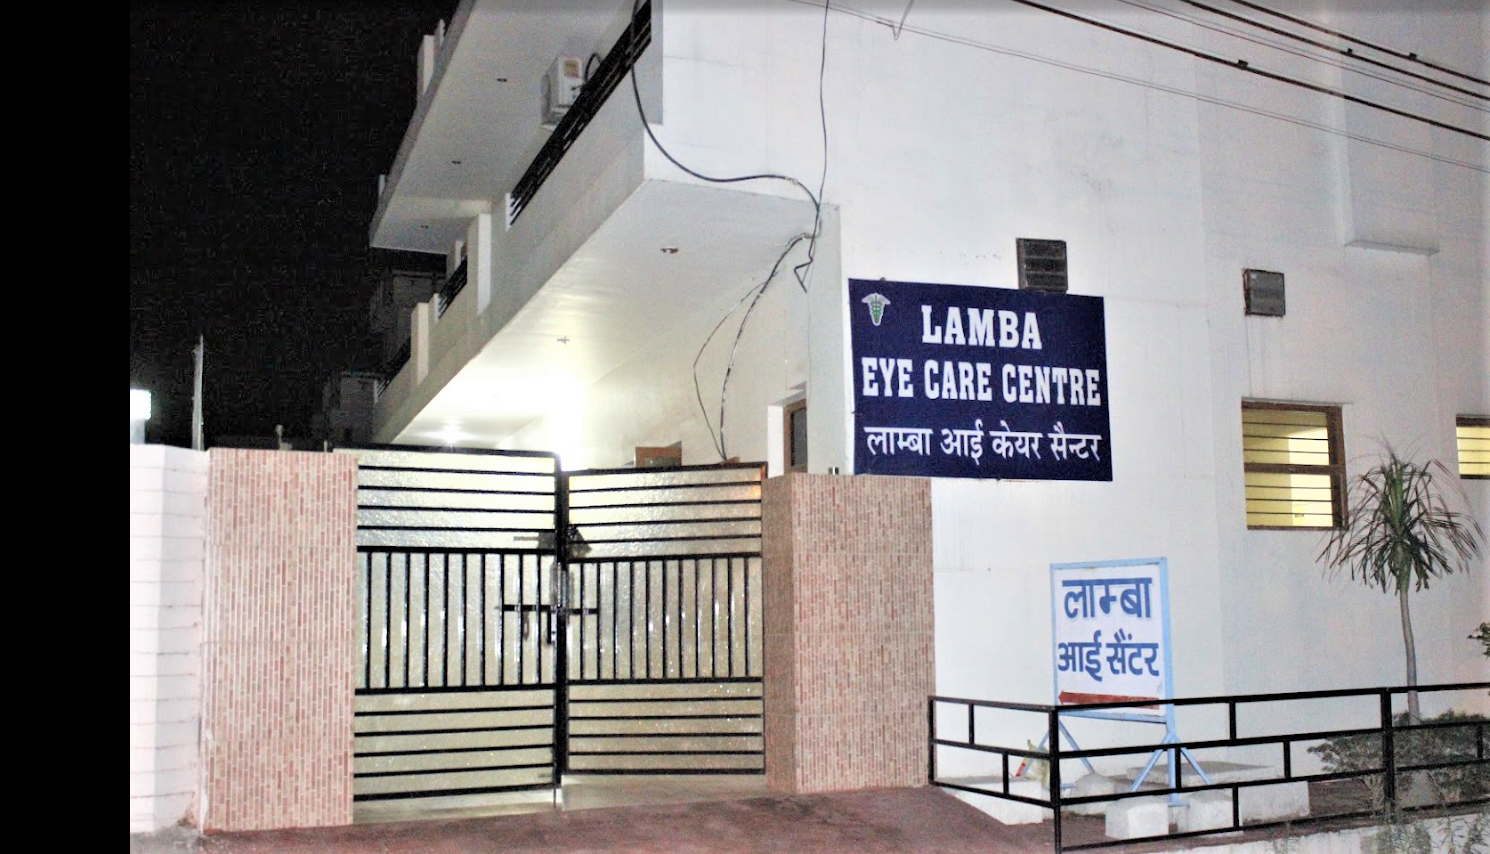 Lamba Eye Care Centre